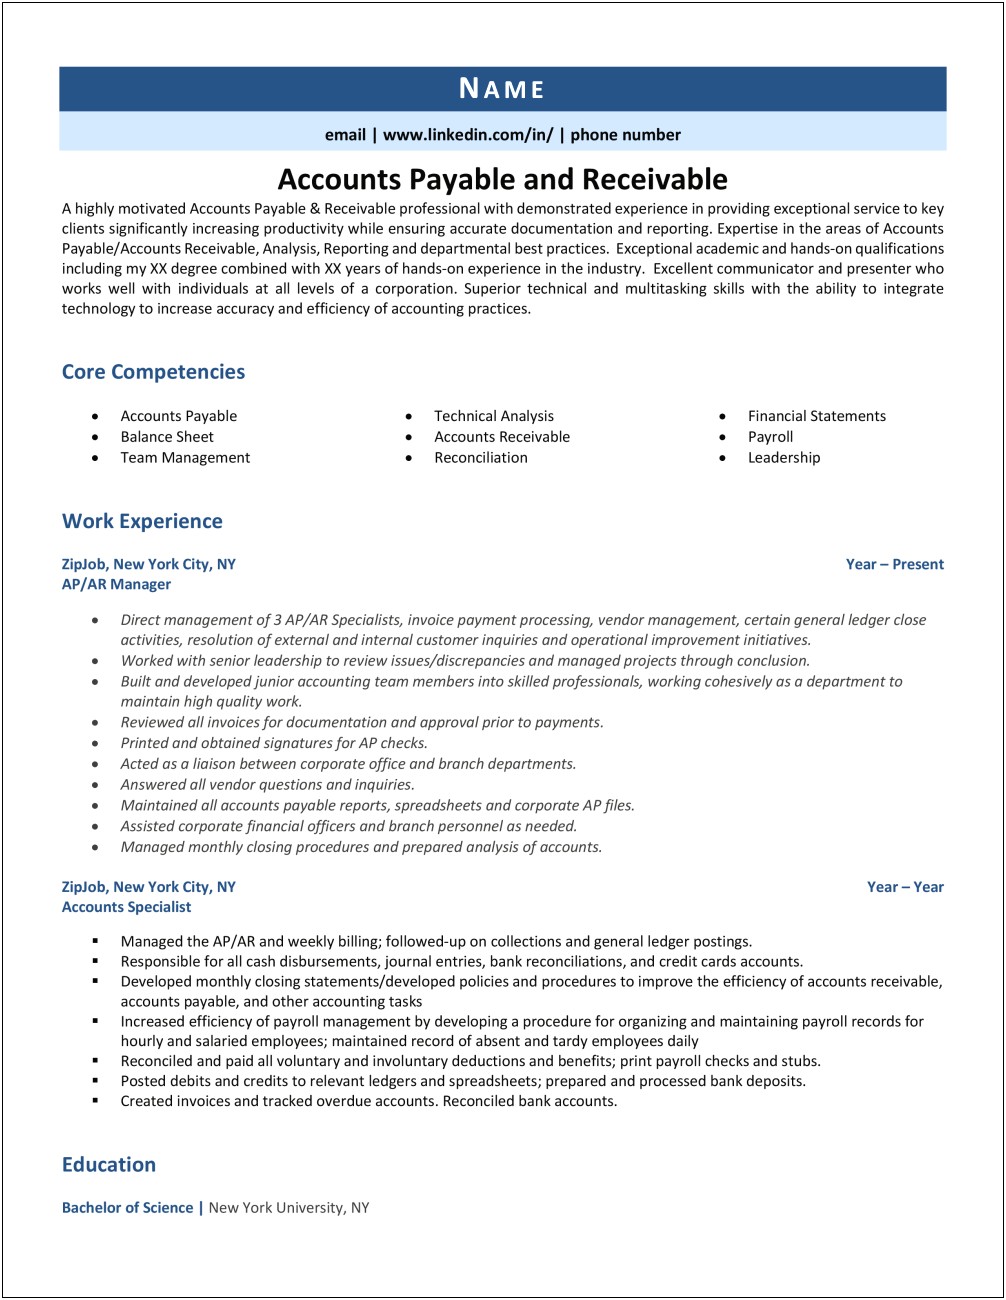 Accounts Payable Job Description On Resume